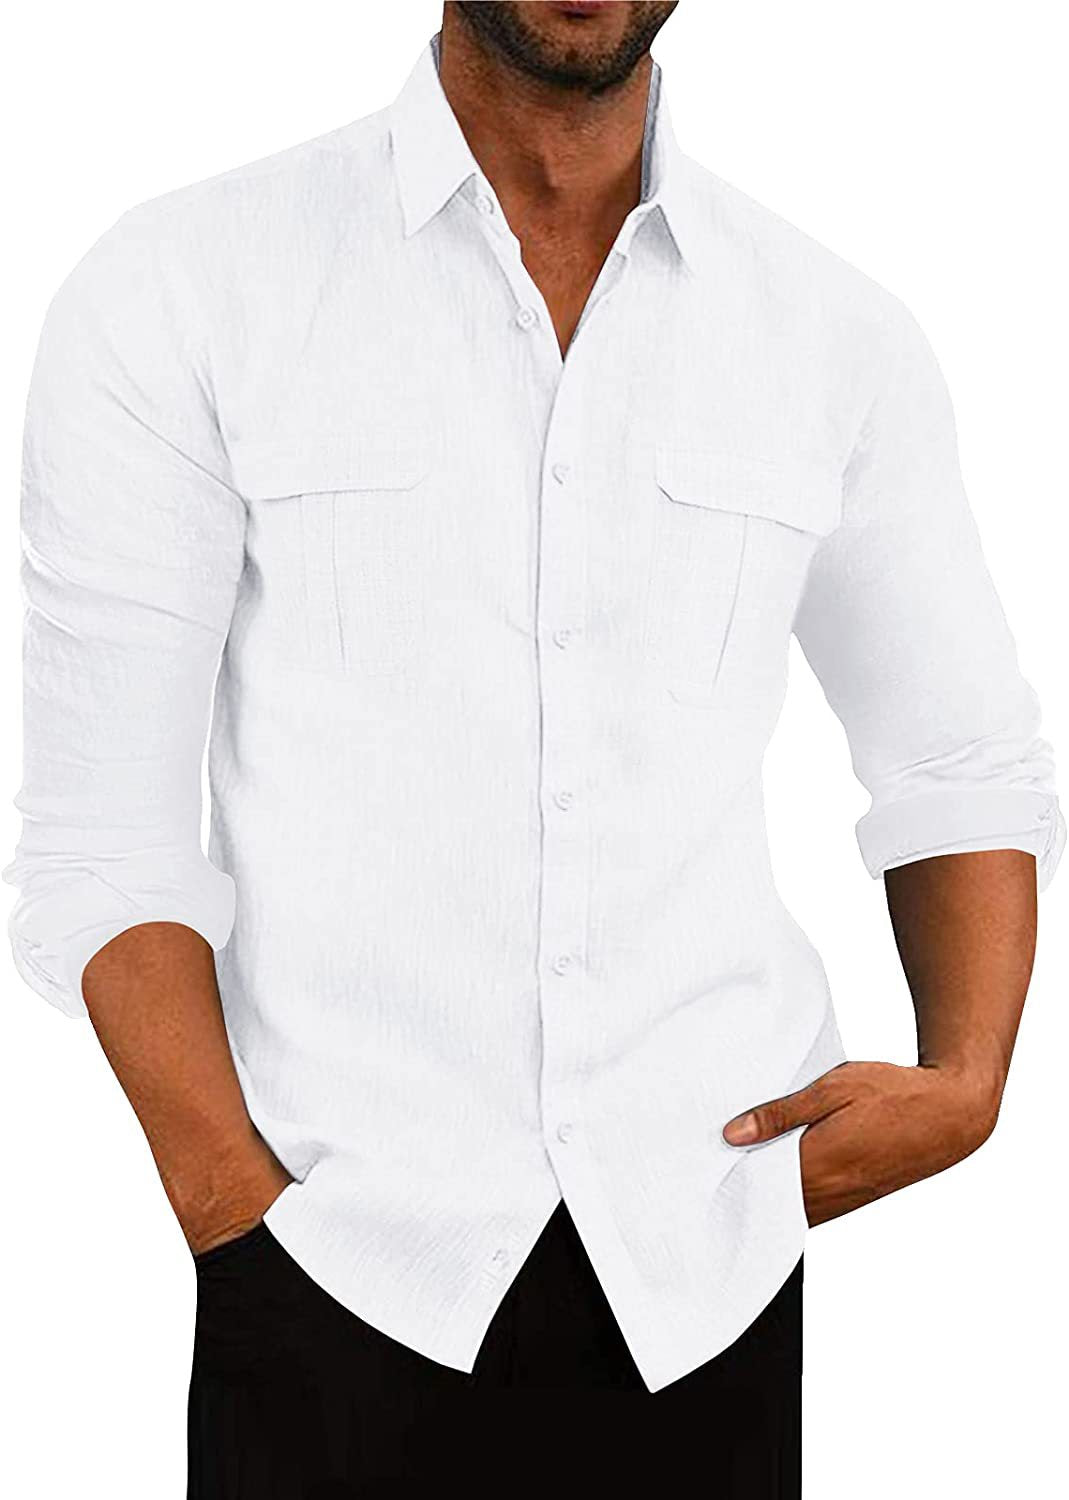 European And American Men's Shirt Double Pocket Cotton Linen